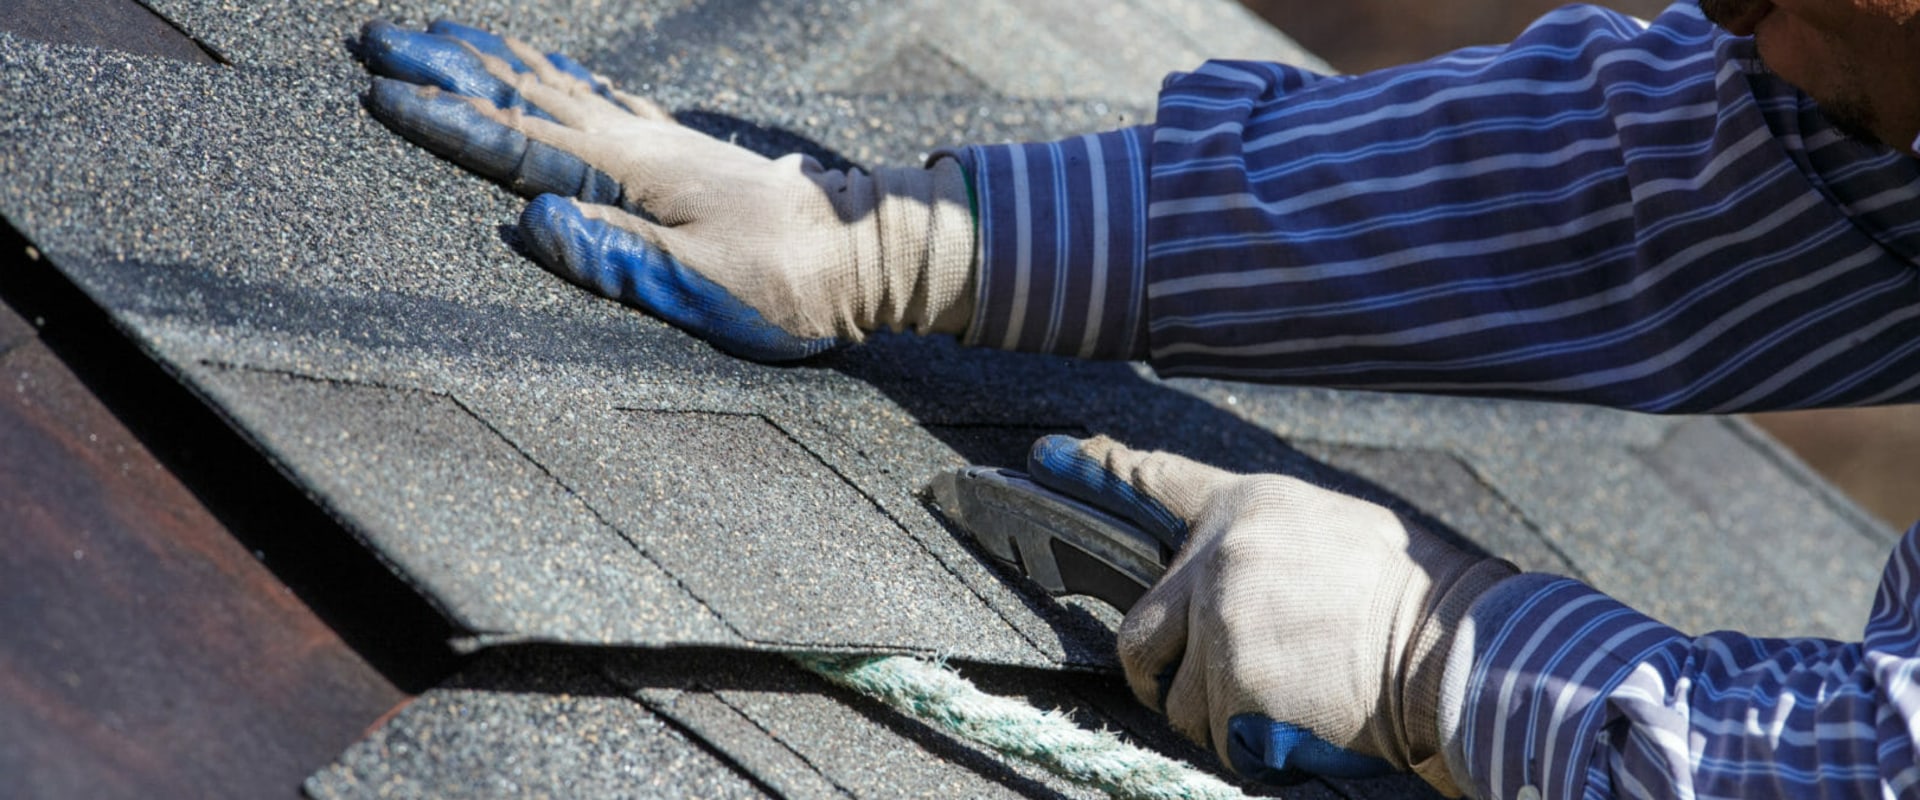 Common Roof Repair Problems